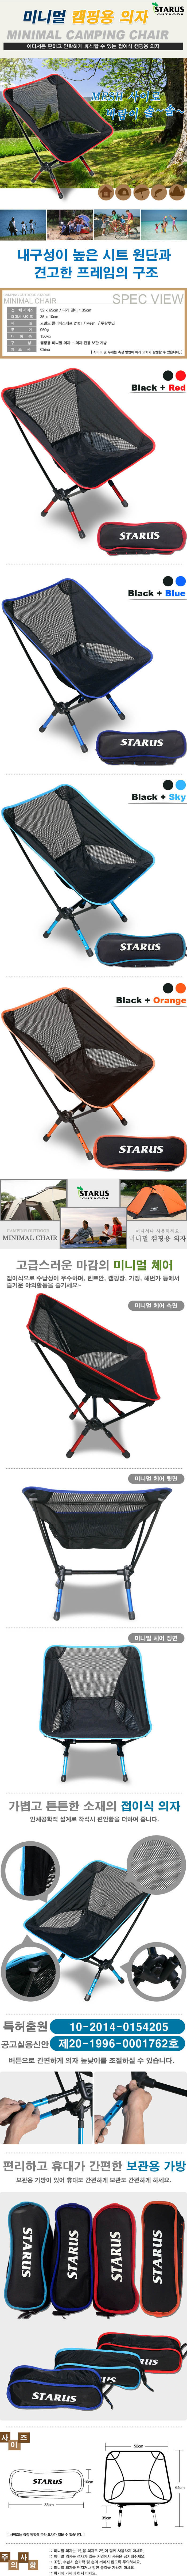 DGS_minimal_camping_chair.jpg